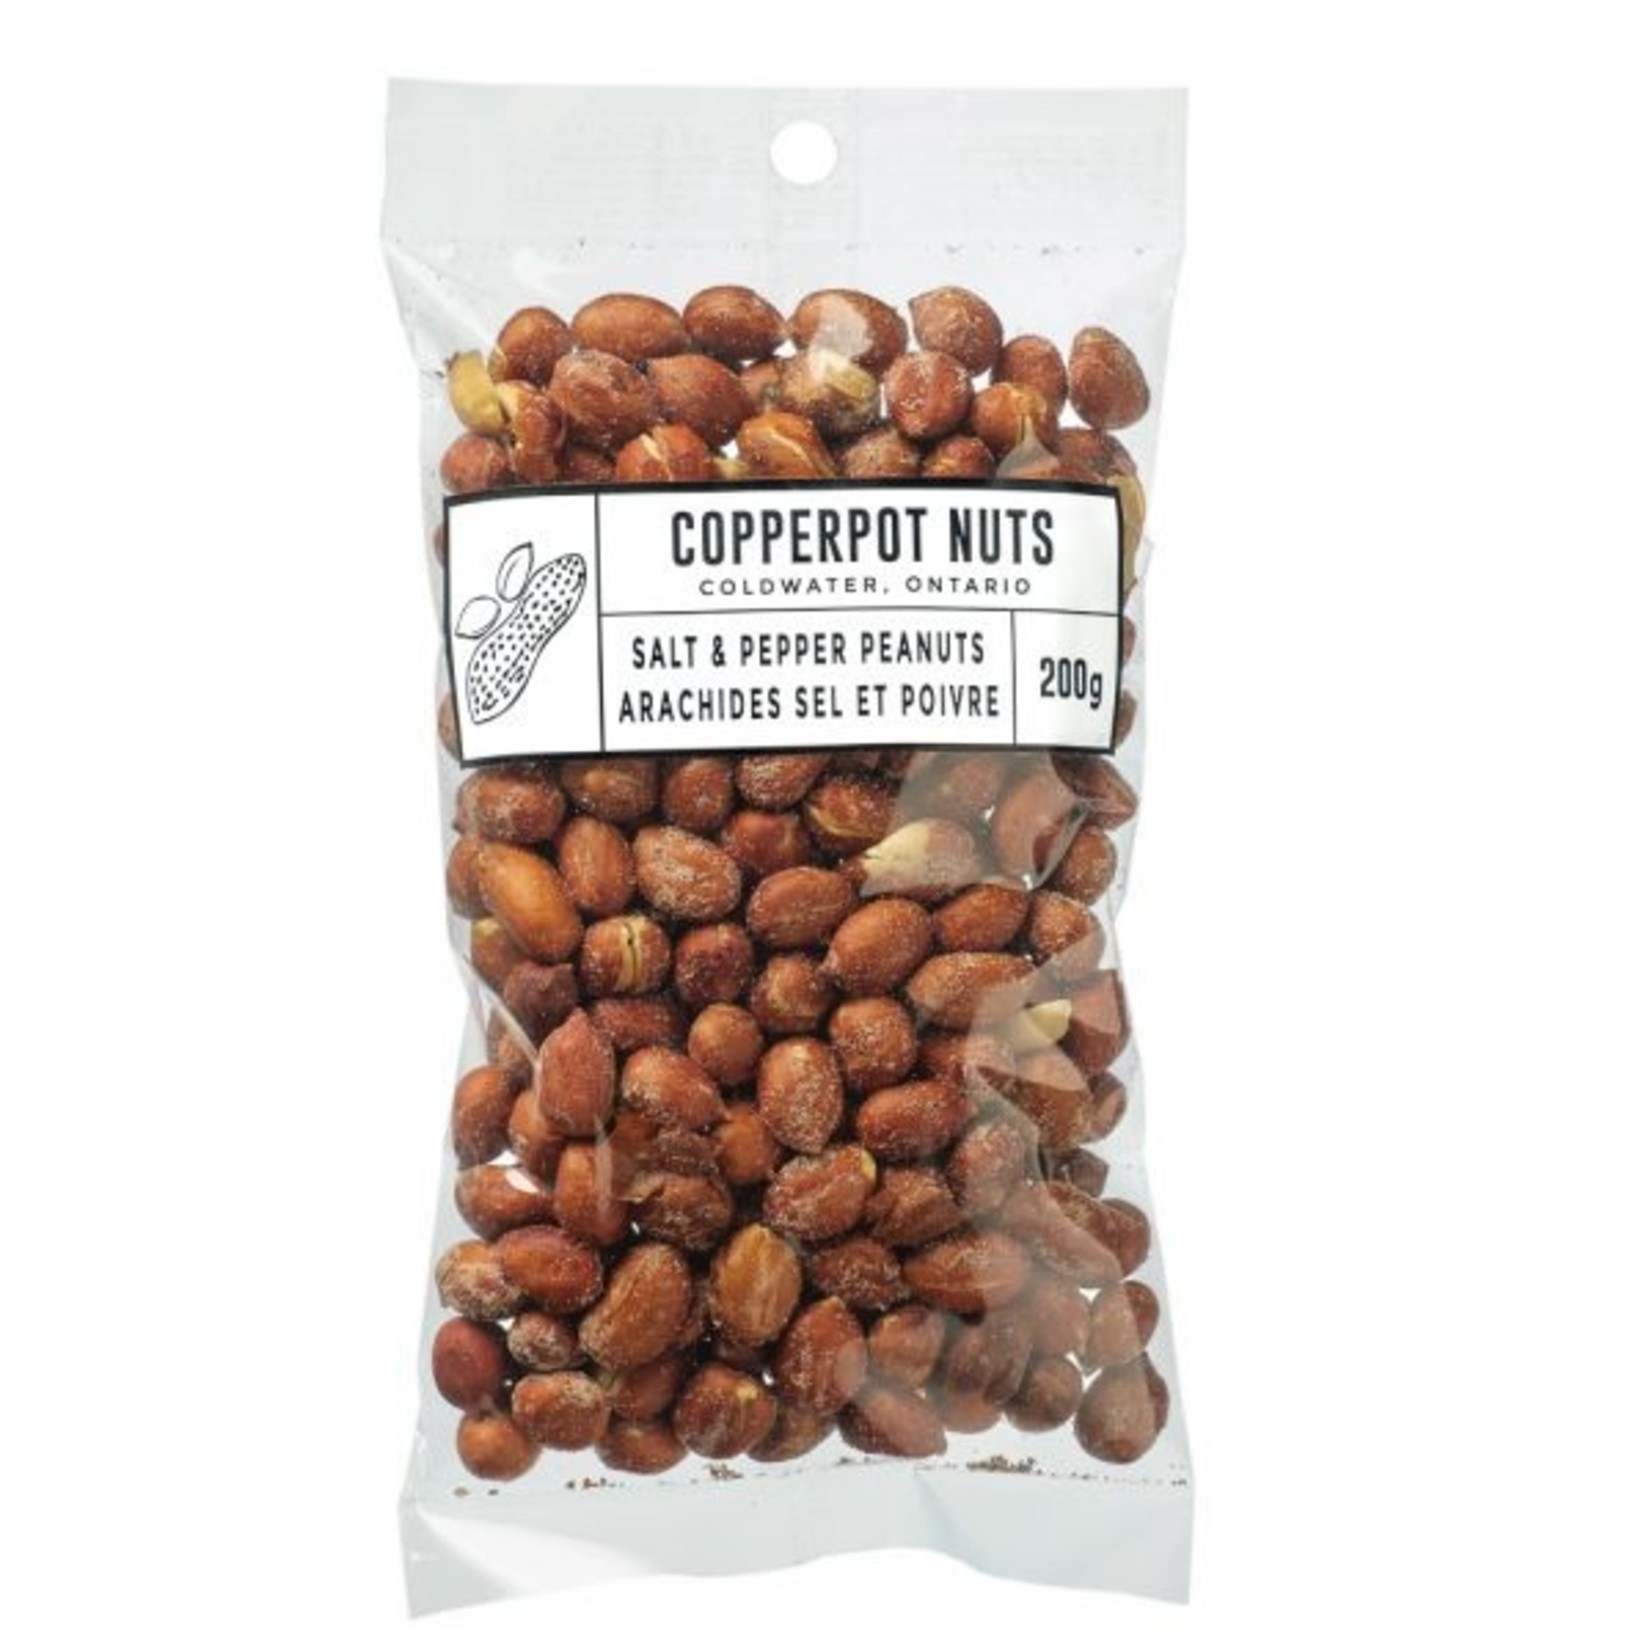 COPPERPOT NUTS COPPERPOT NUTS SALT & PEPPER PEANUTS